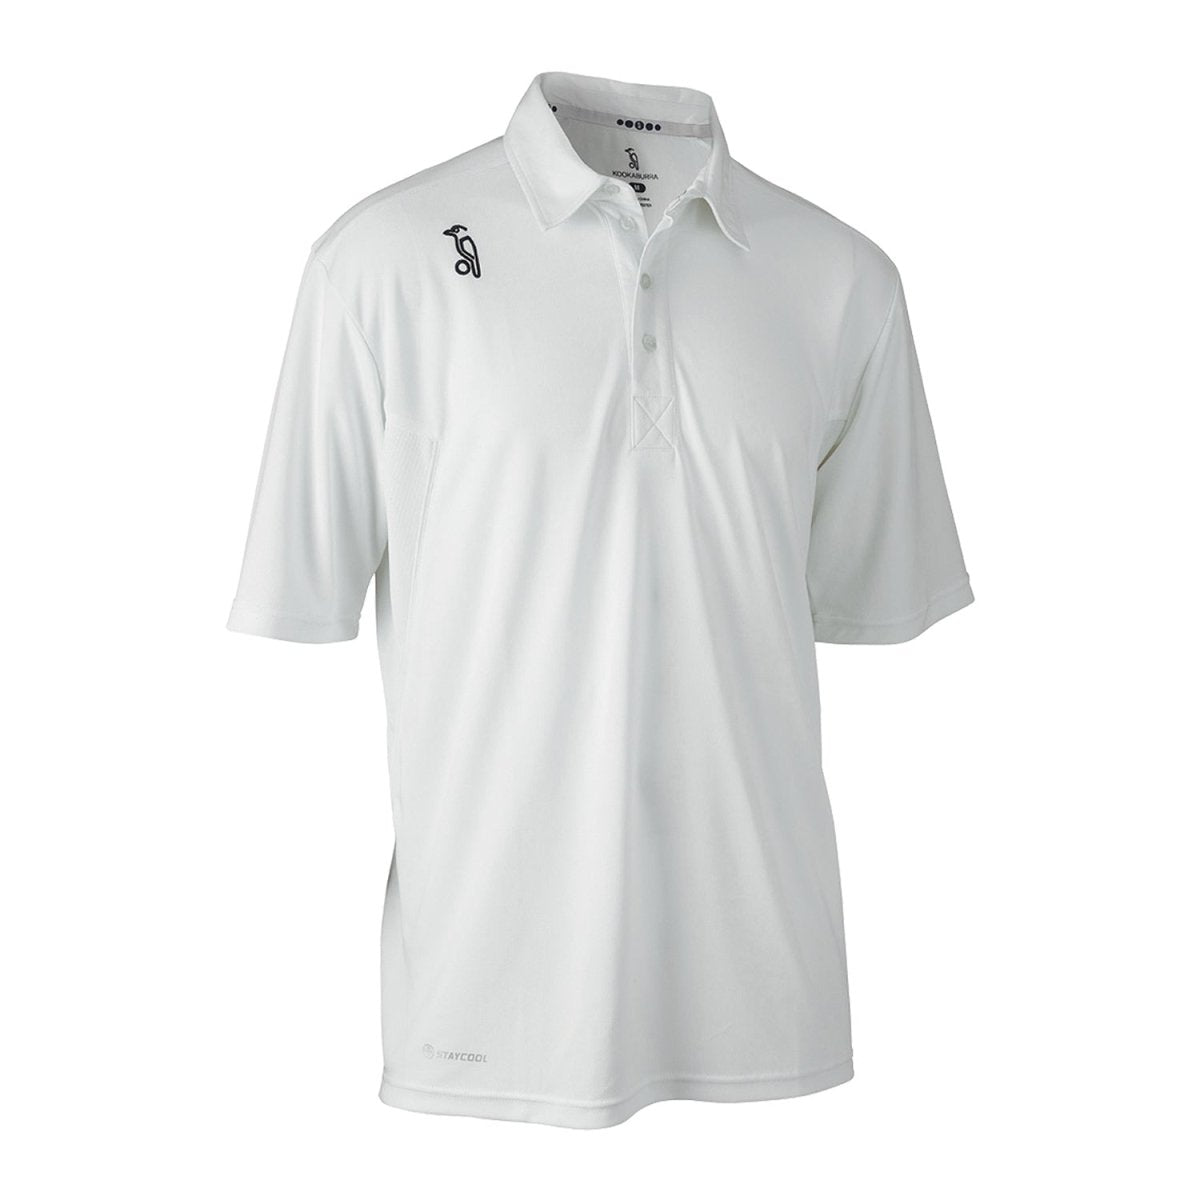 Kookaburra Pro Active Short Sleeve Cricket Shirt White.